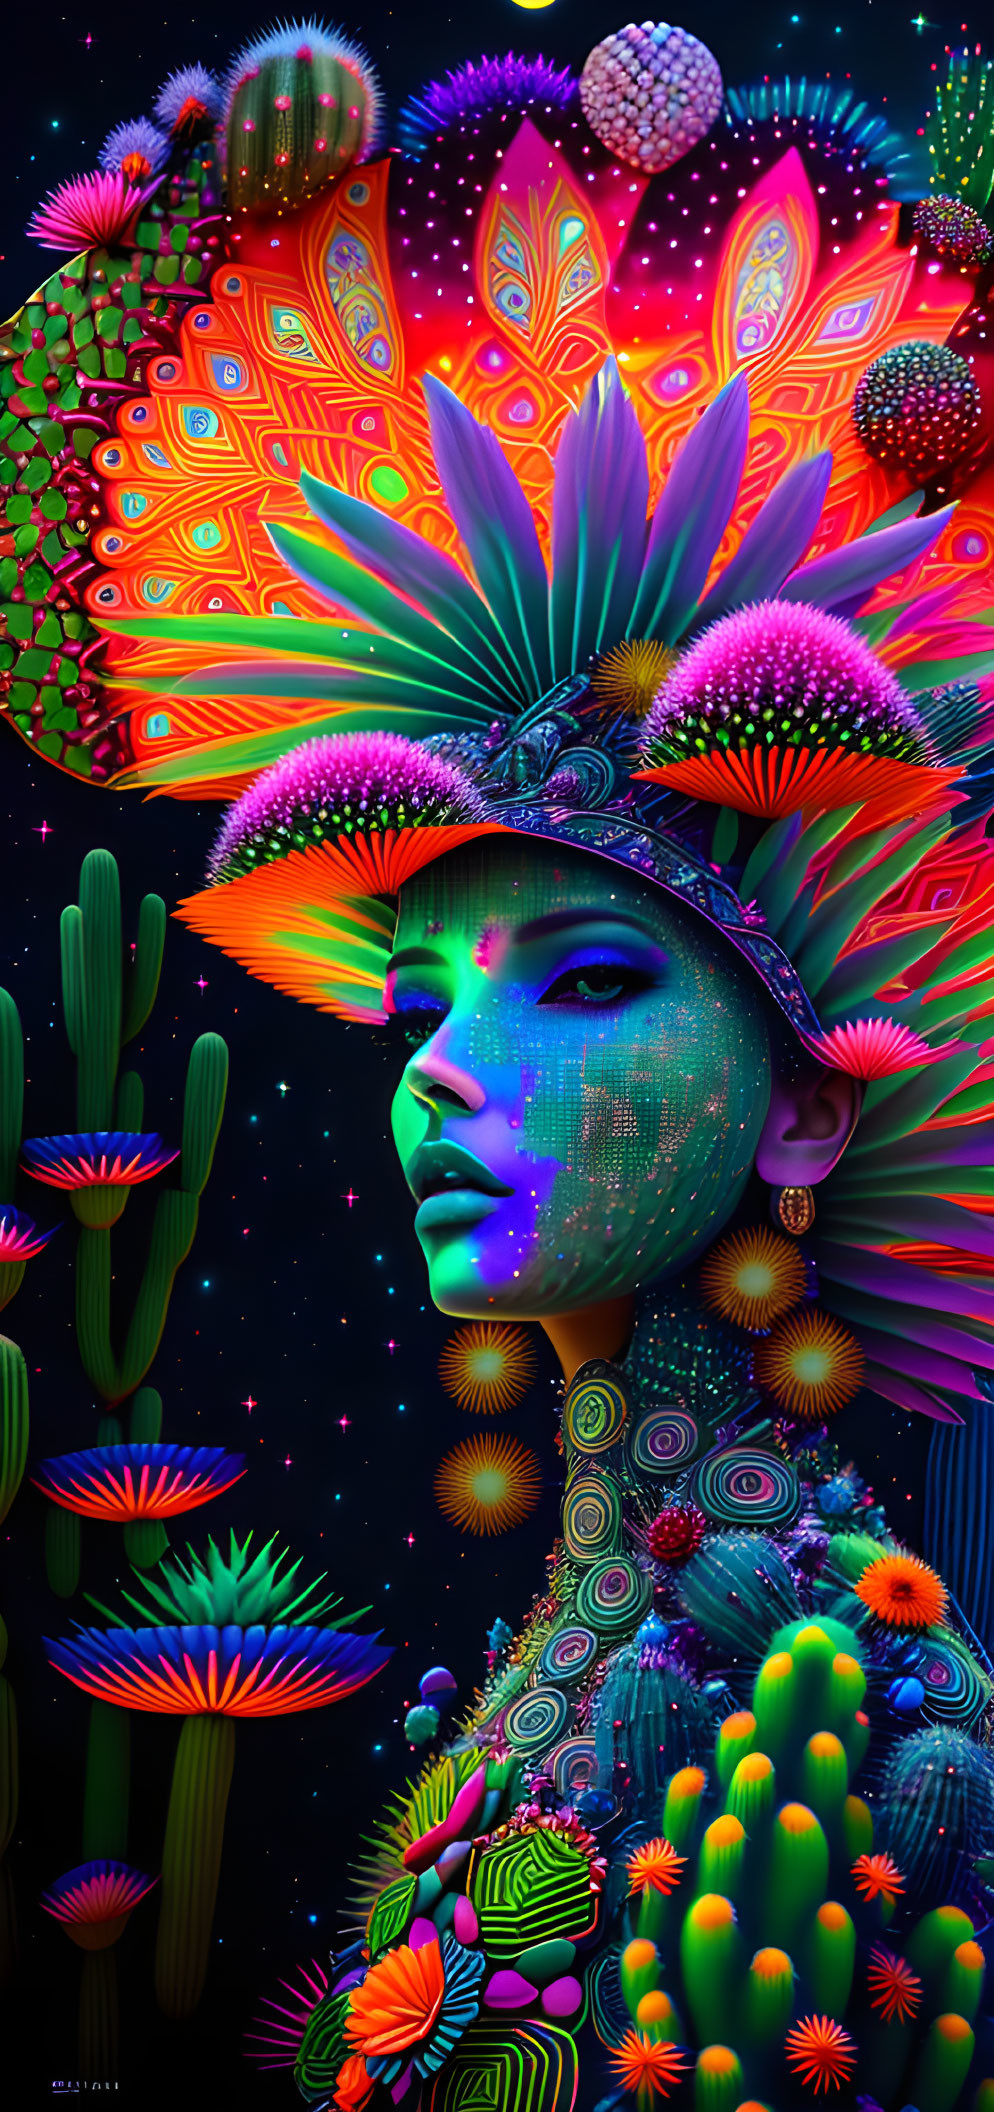 Cactus Woman of the Intergalactic Spheres